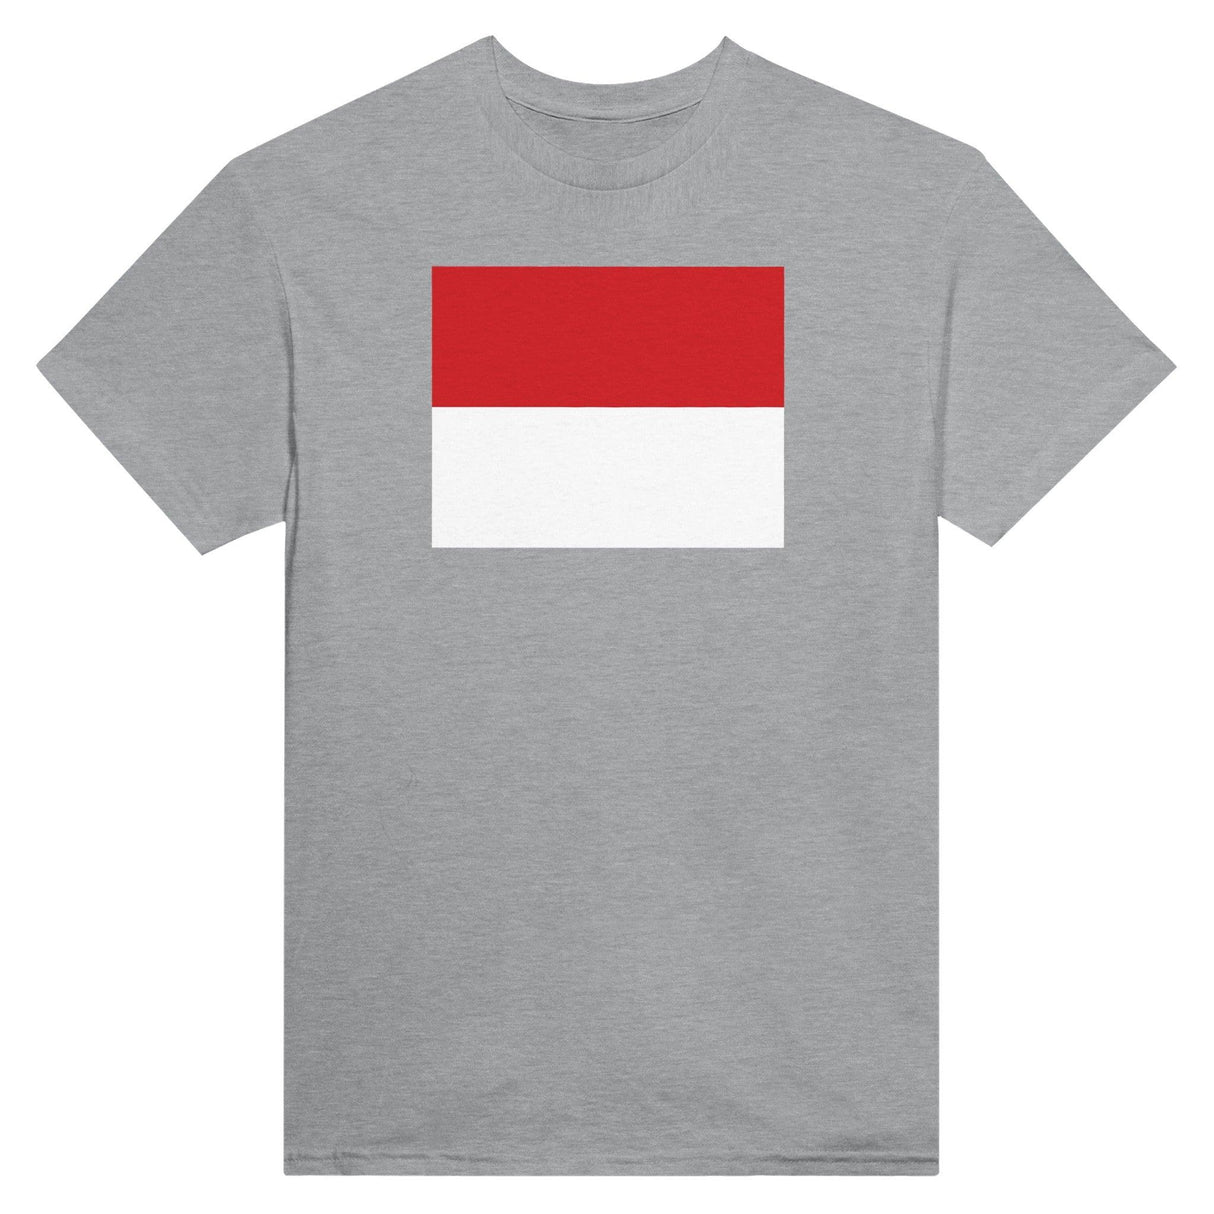 T-shirt Drapeau de Monaco - Pixelforma 